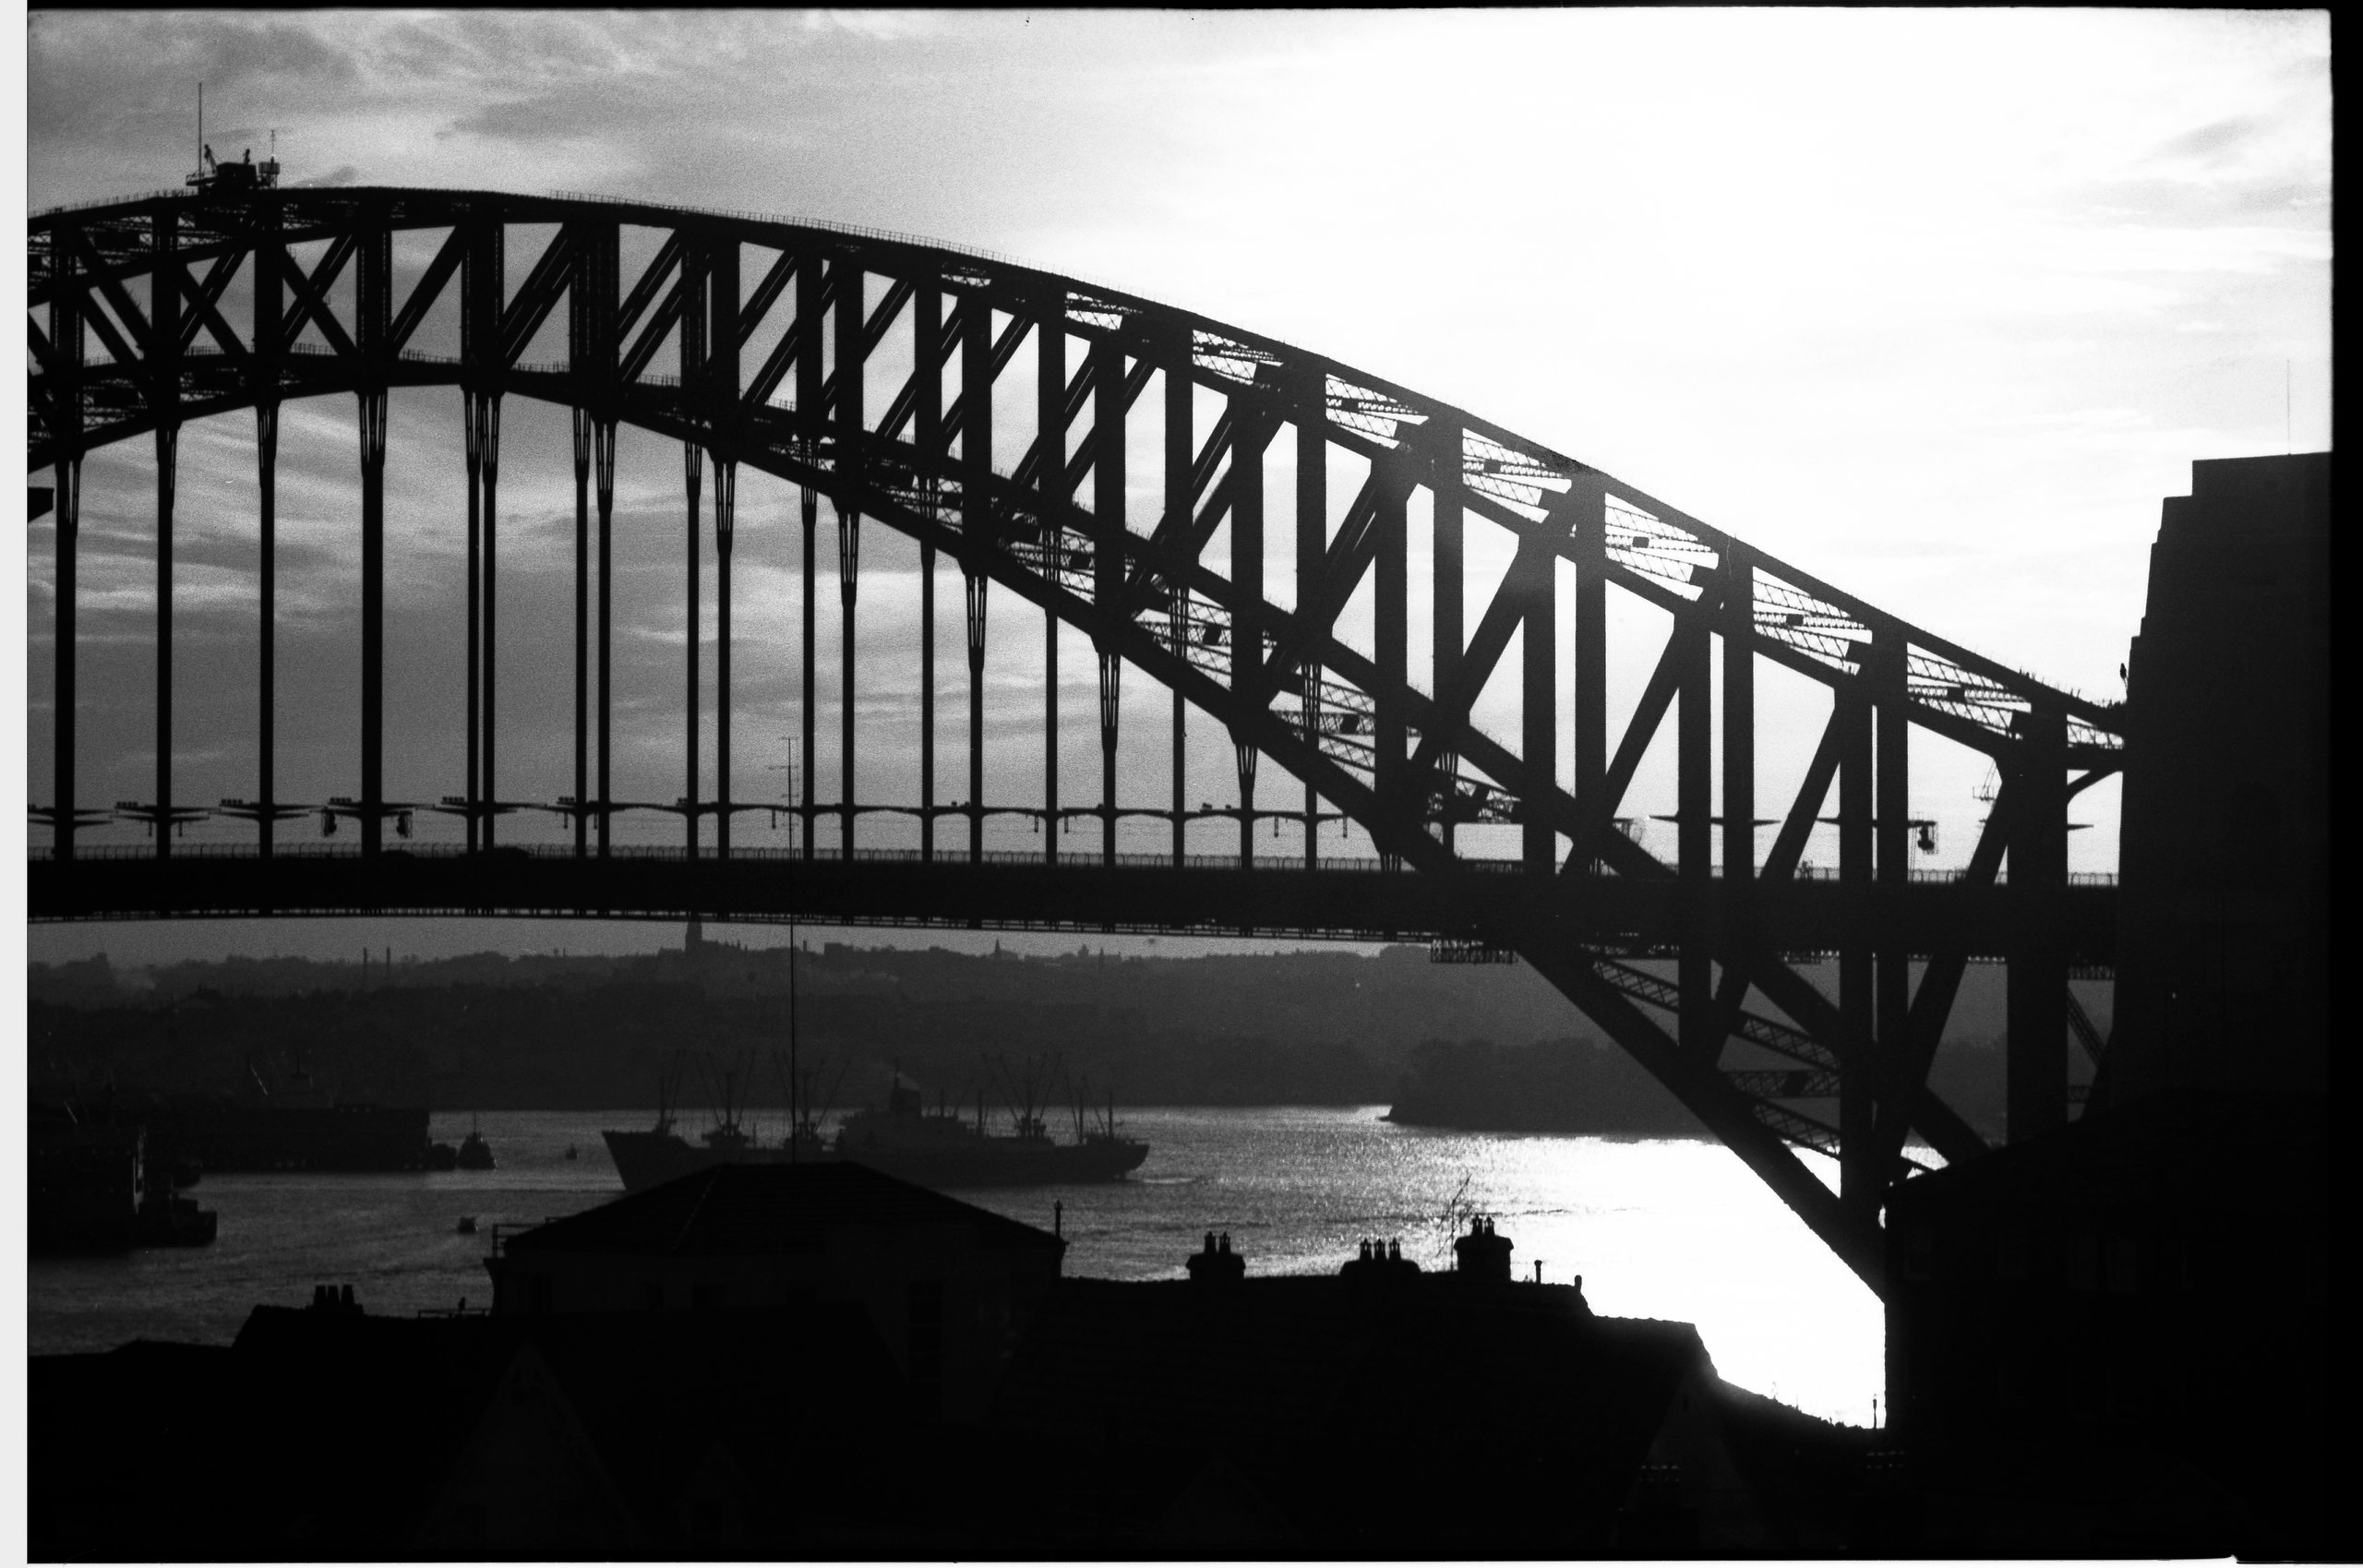 Negatives of Sydney Harbour Bridge photographed by David Mist